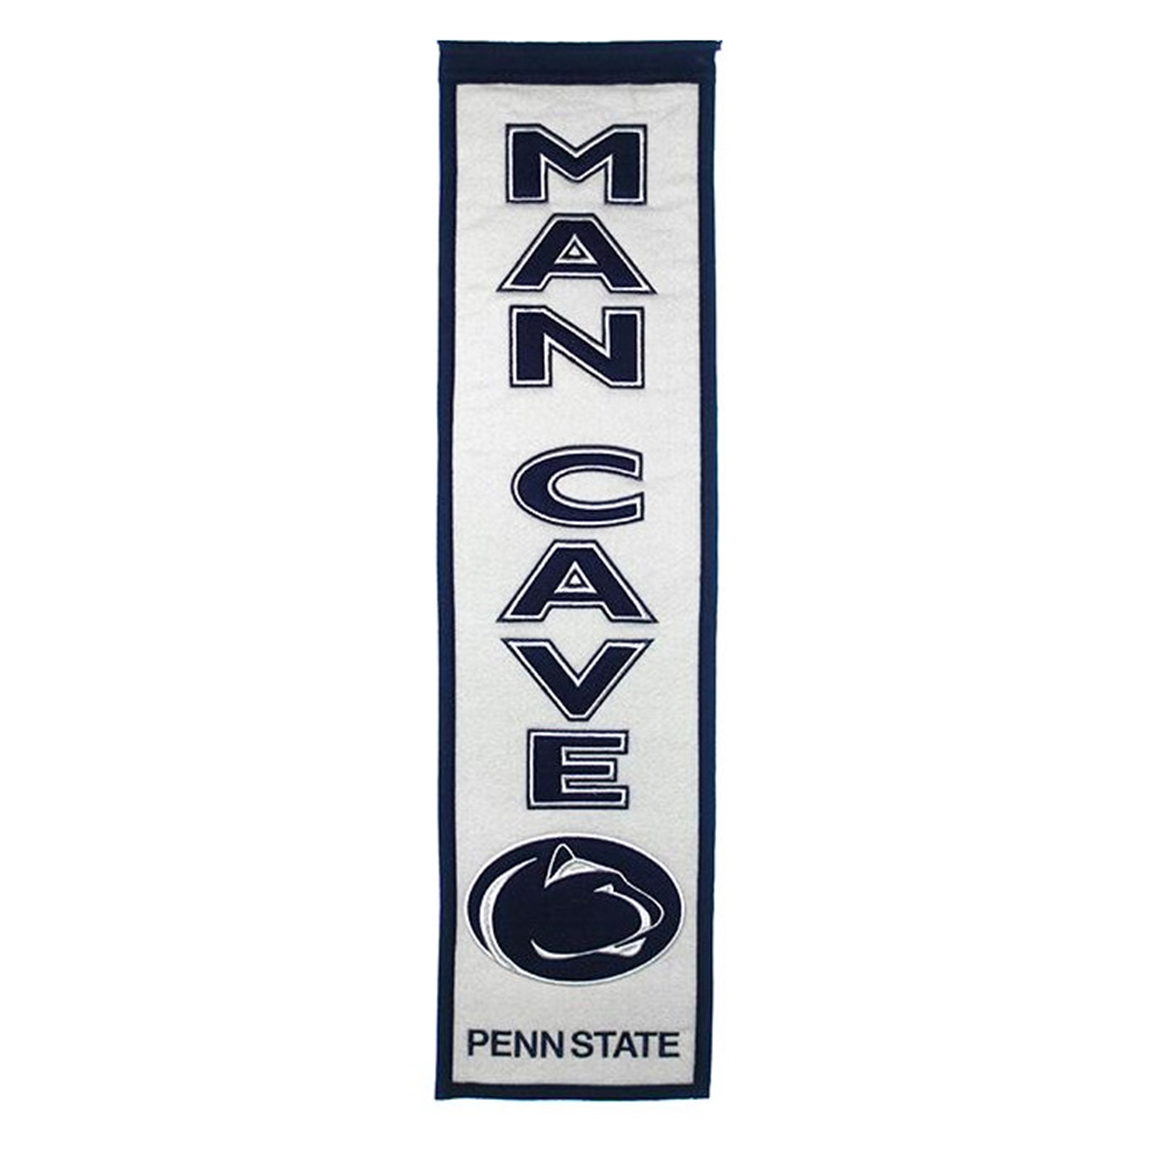 Penn State Man Cave Banner